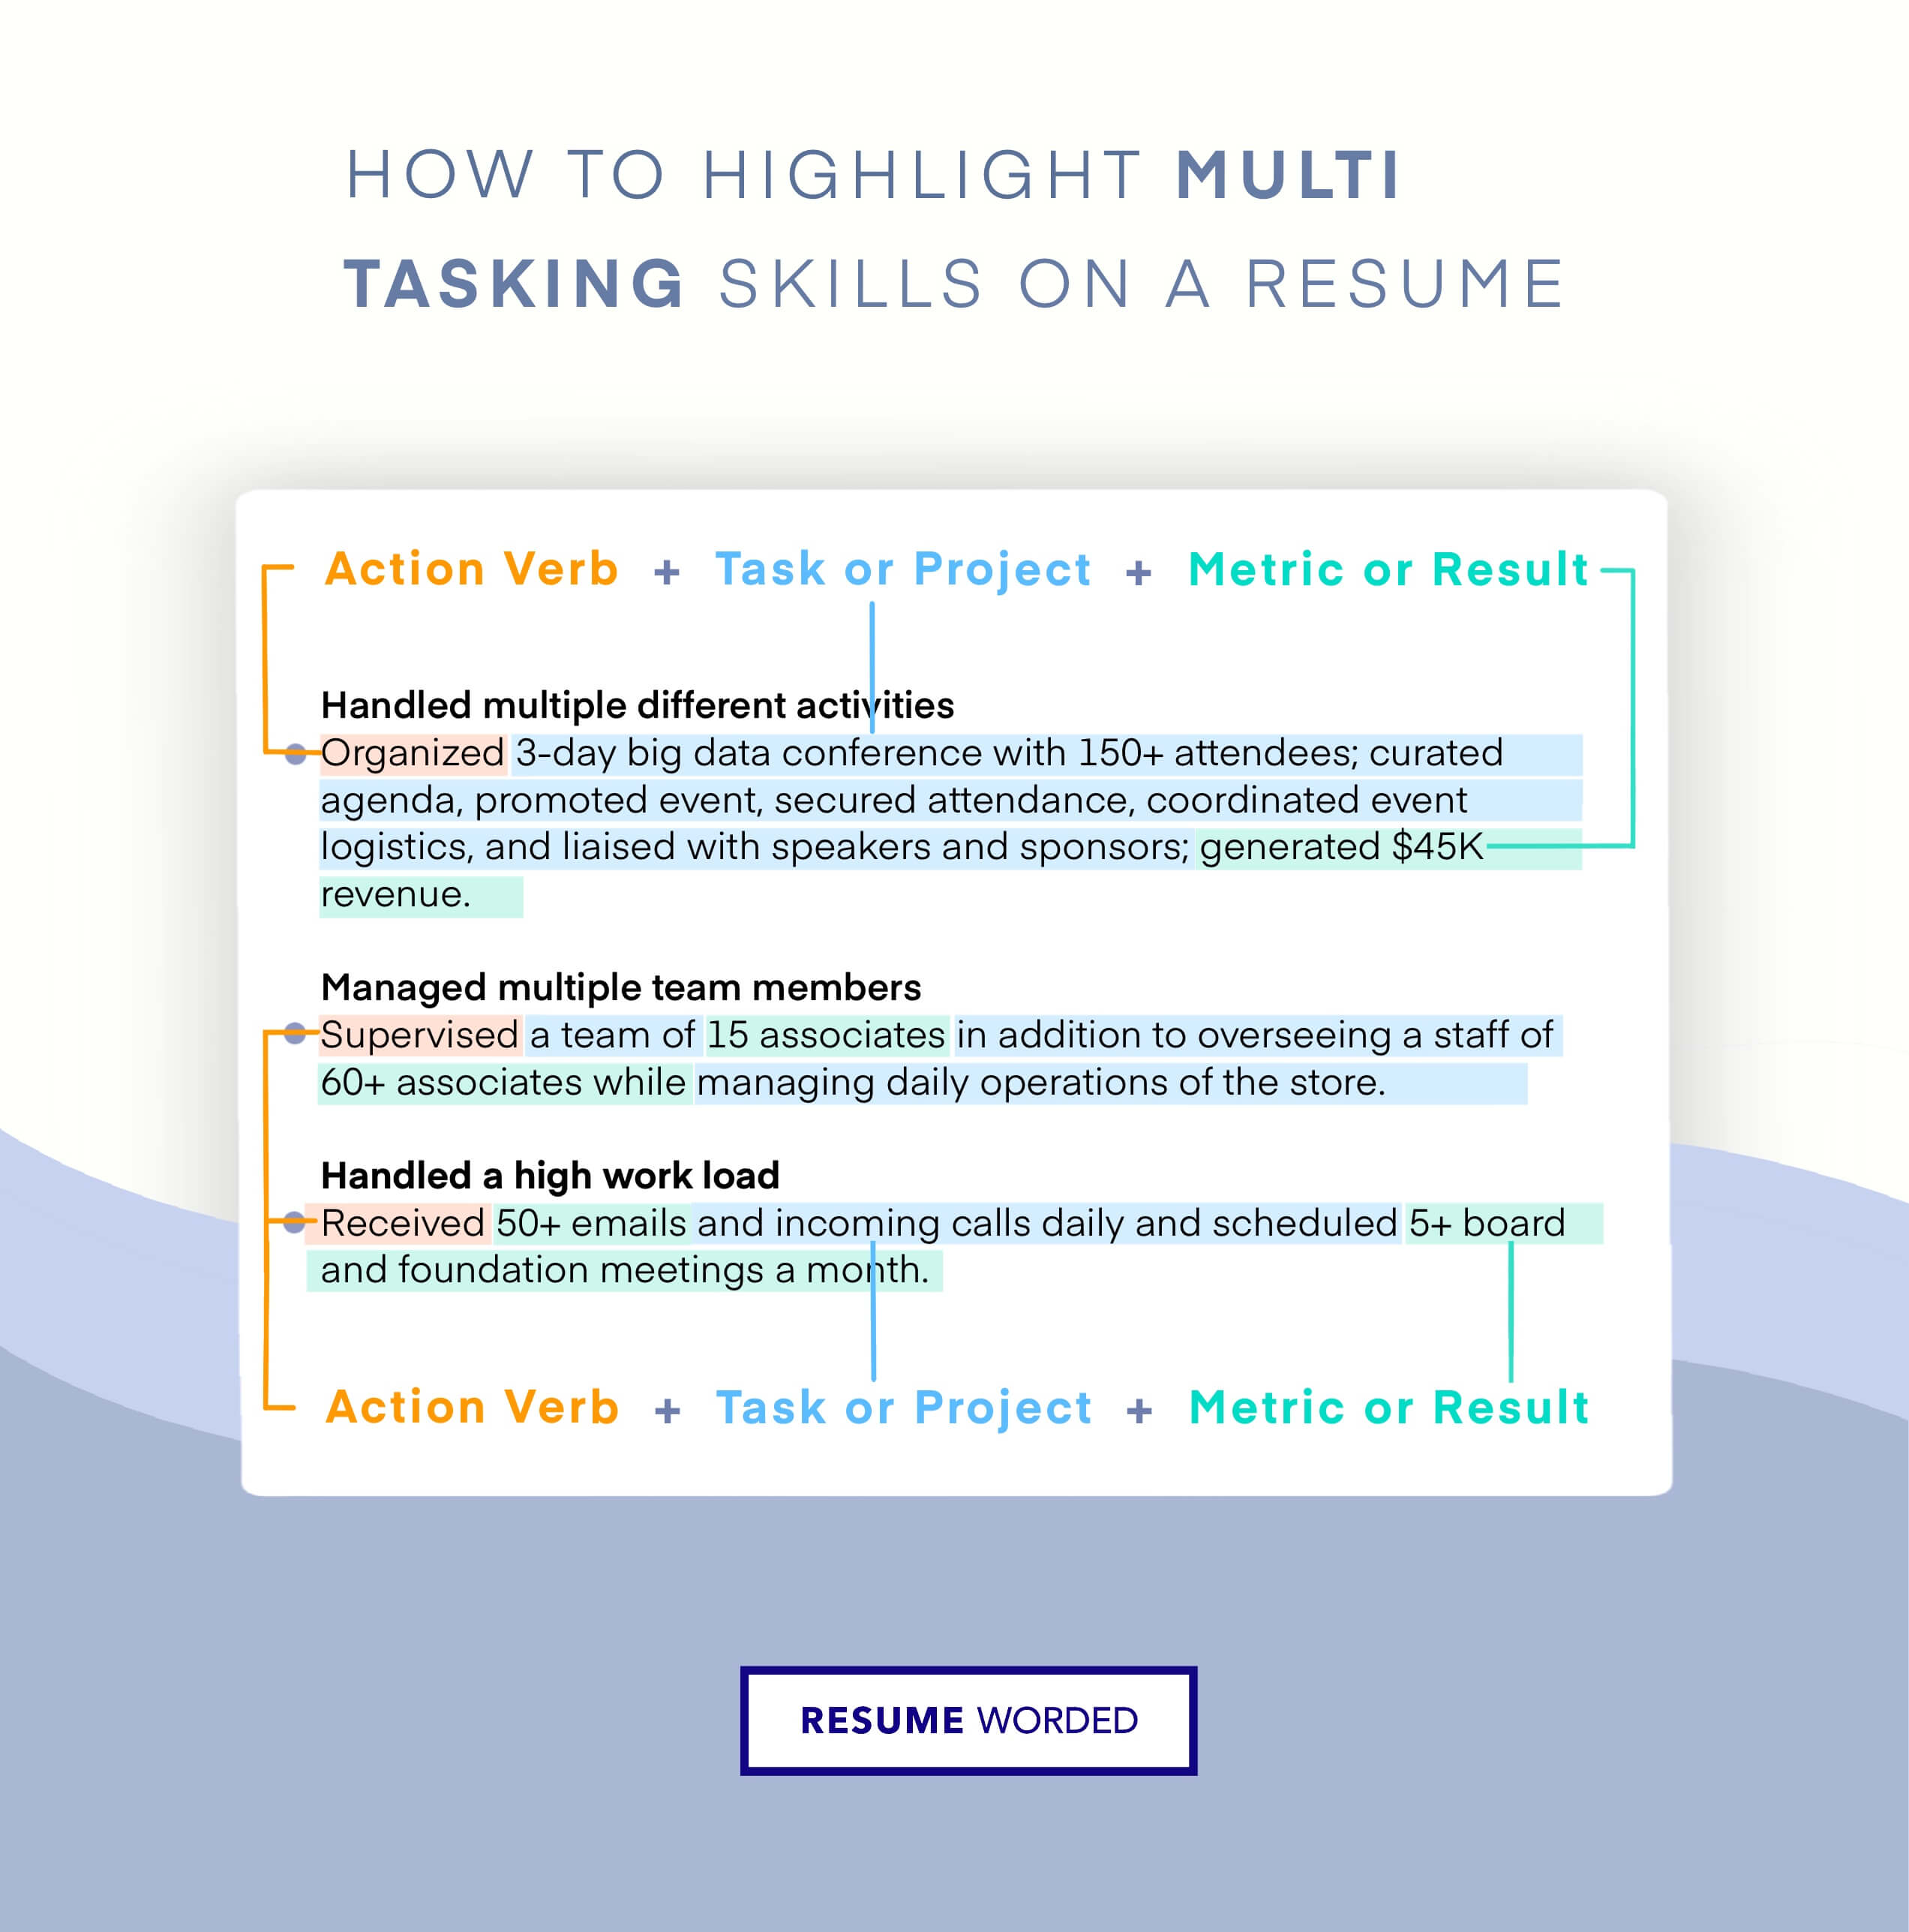 Emphasize multitasking abilities - Production Assistant Resume